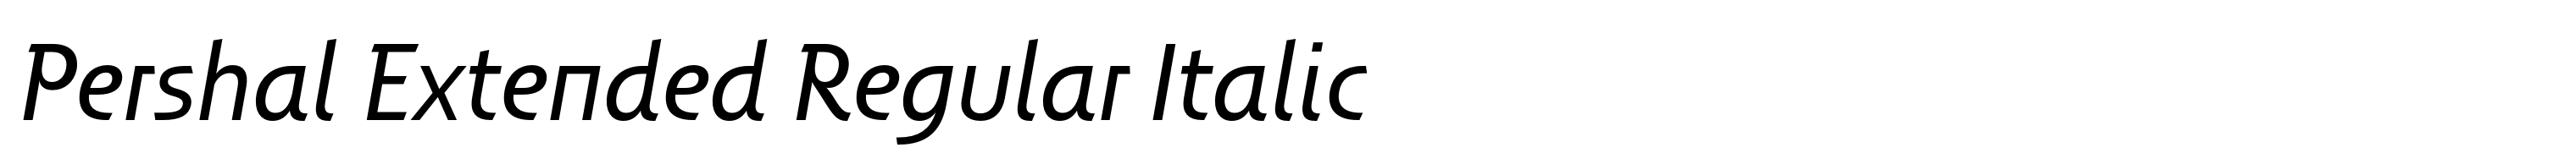 Pershal Extended Regular Italic